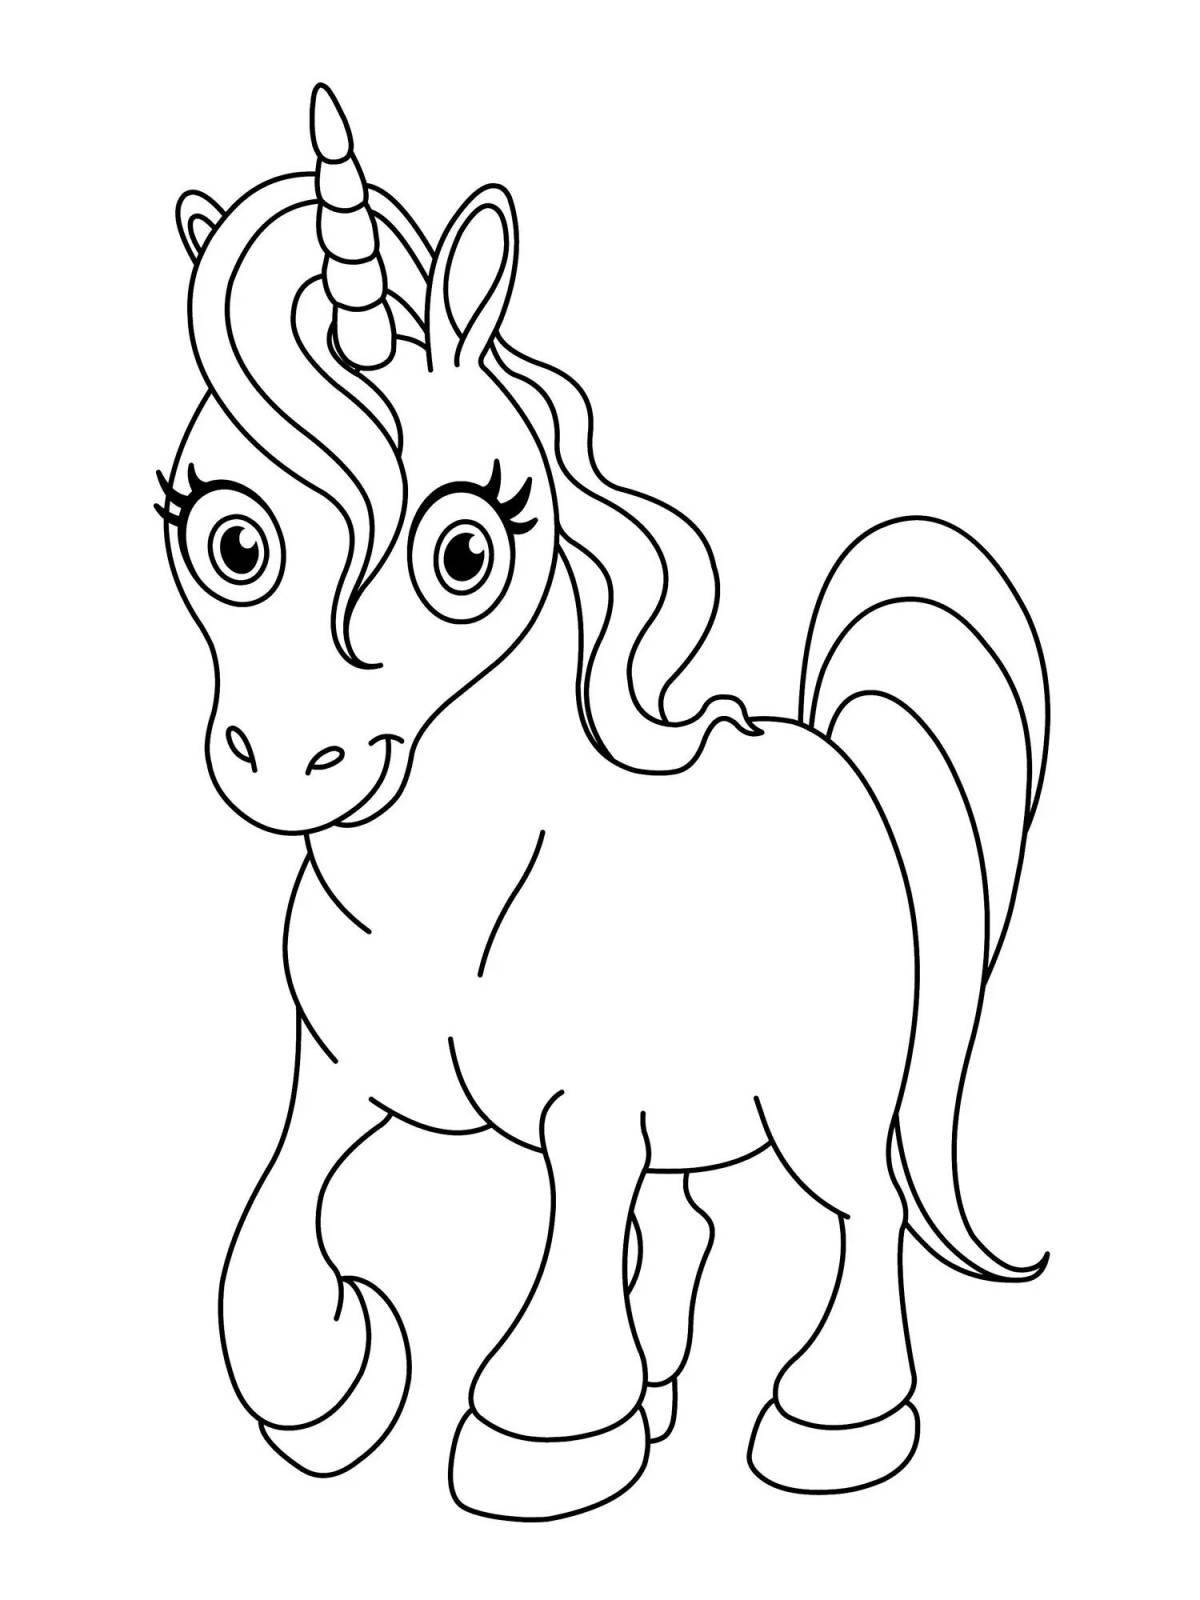 Fun coloring how to draw a unicorn